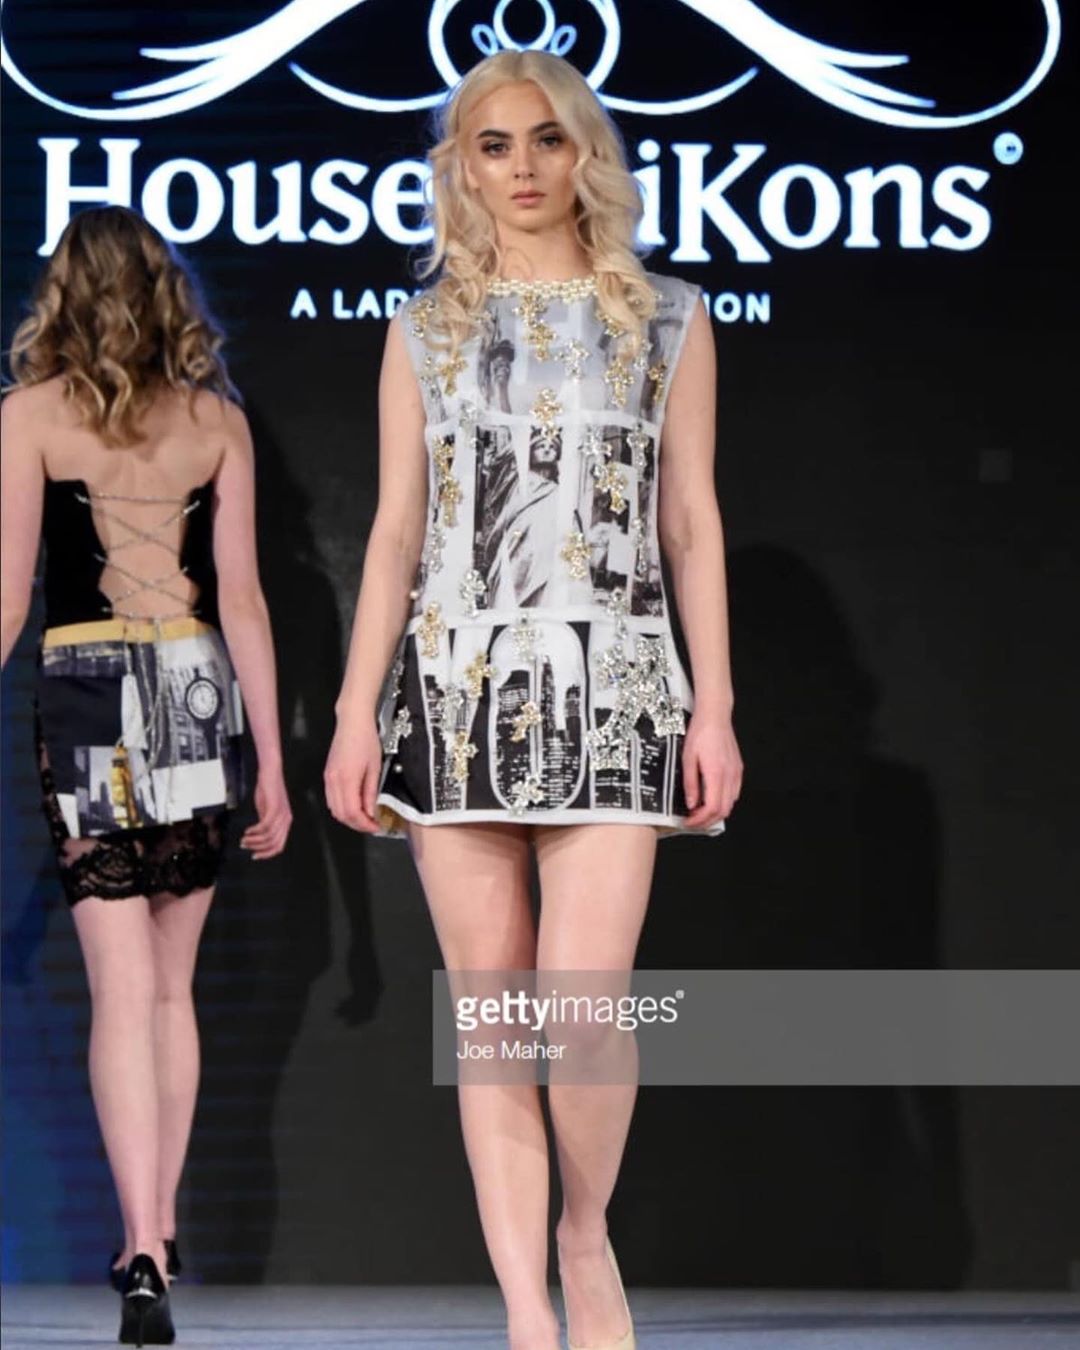 House of iKons DURING London Fashion Week February 2019Image courtesy of @gettyimages
Designer: @jacinta_ligon
Model: Roxana Gavrau
HMUA Sponsor: @jackieavalon #BeYourSelf #LoveYourSelf #BeYourOwniKon
#HouseofiKons #LadyK #GlobalPlatform
#fashion #music #emerging #designers #artists #talented #instalove #art #beauty #Makeup #Film #TV #MusicVideos #ChildrensFashion #models #runway #iKons #CEO #Producer #MusicDirector #ShineBrightLikeaDiamond